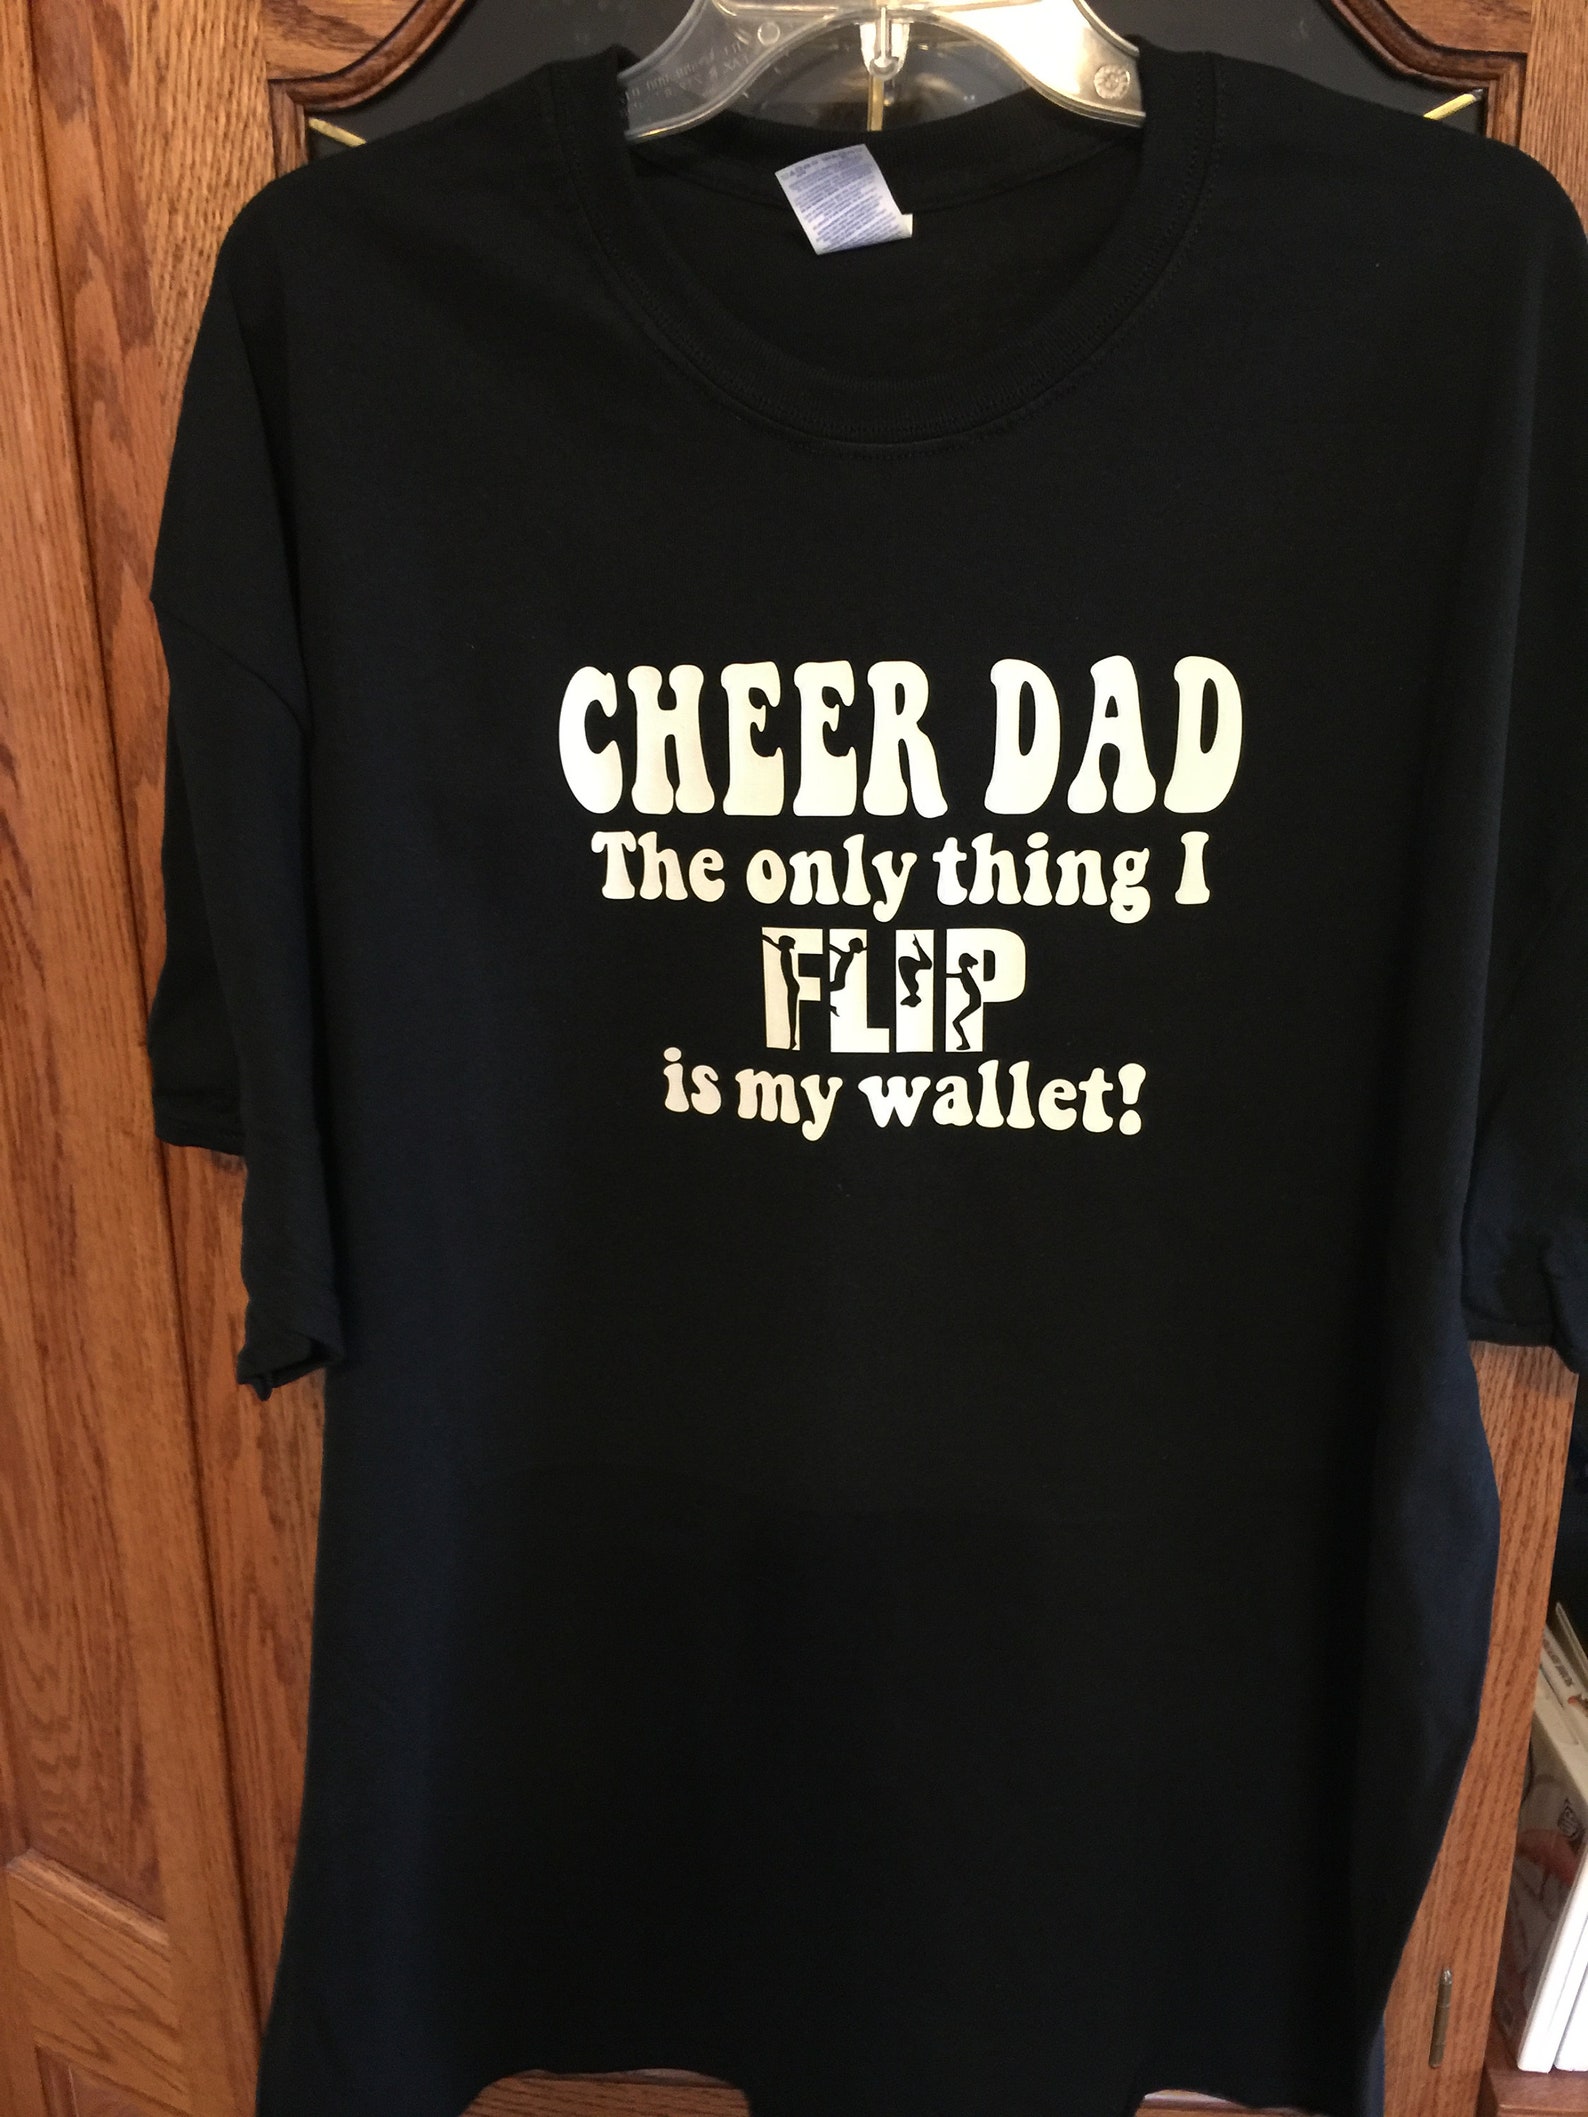 Cheer Dad Shirt Cheer Dad Flip My Wallet Shirt Poor Cheer Dad Shirt ...